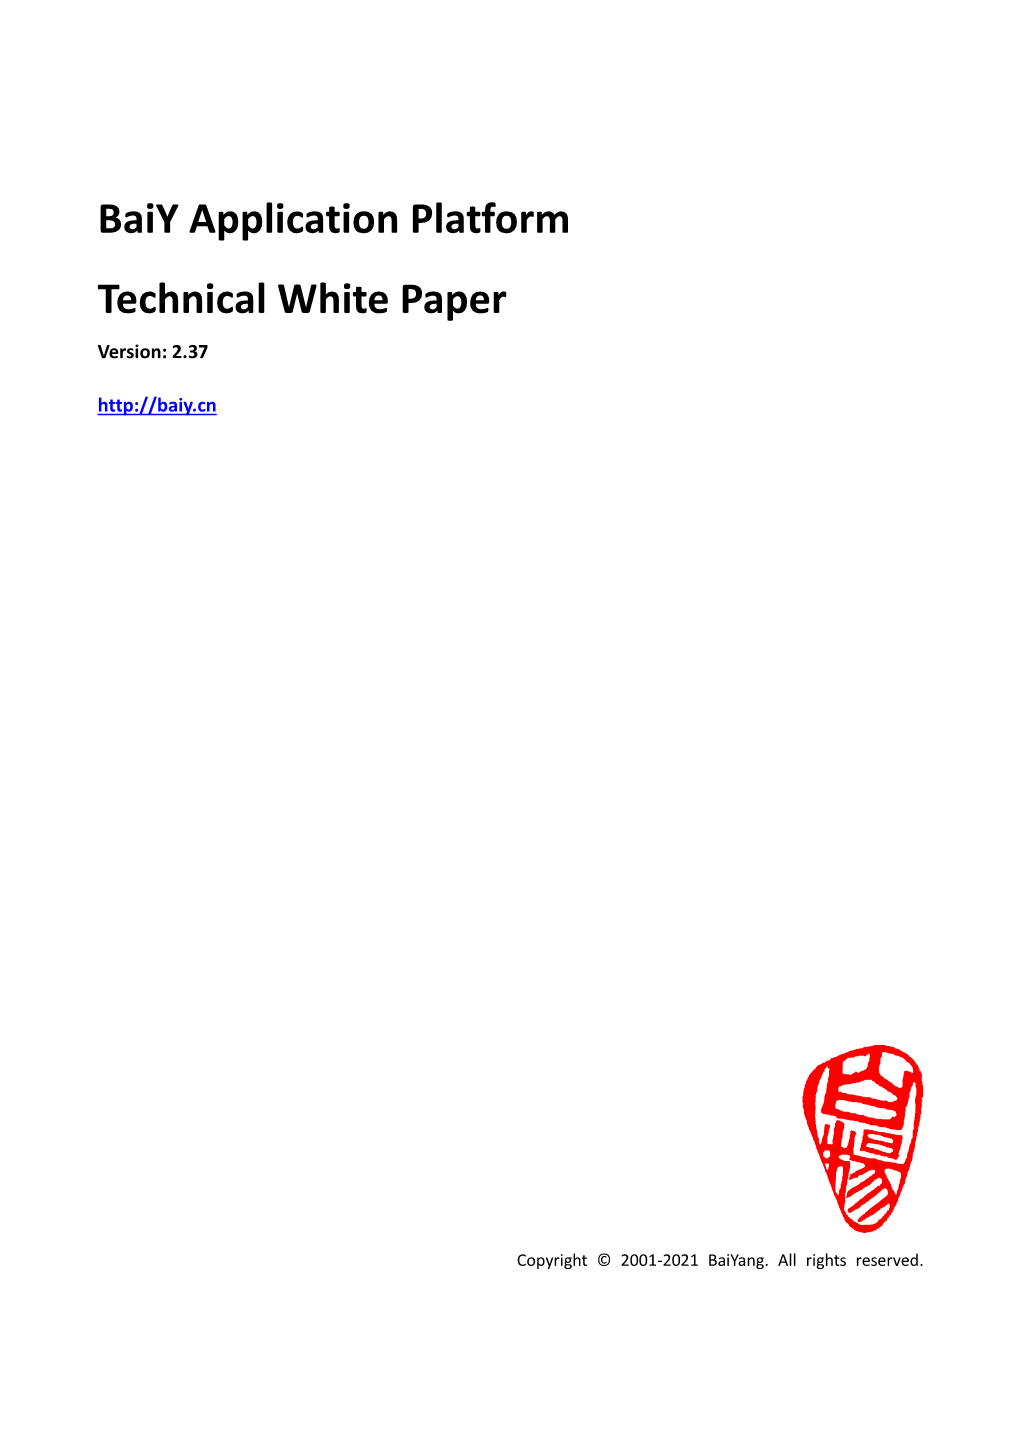 Baiy Application Platform Technical White Paper